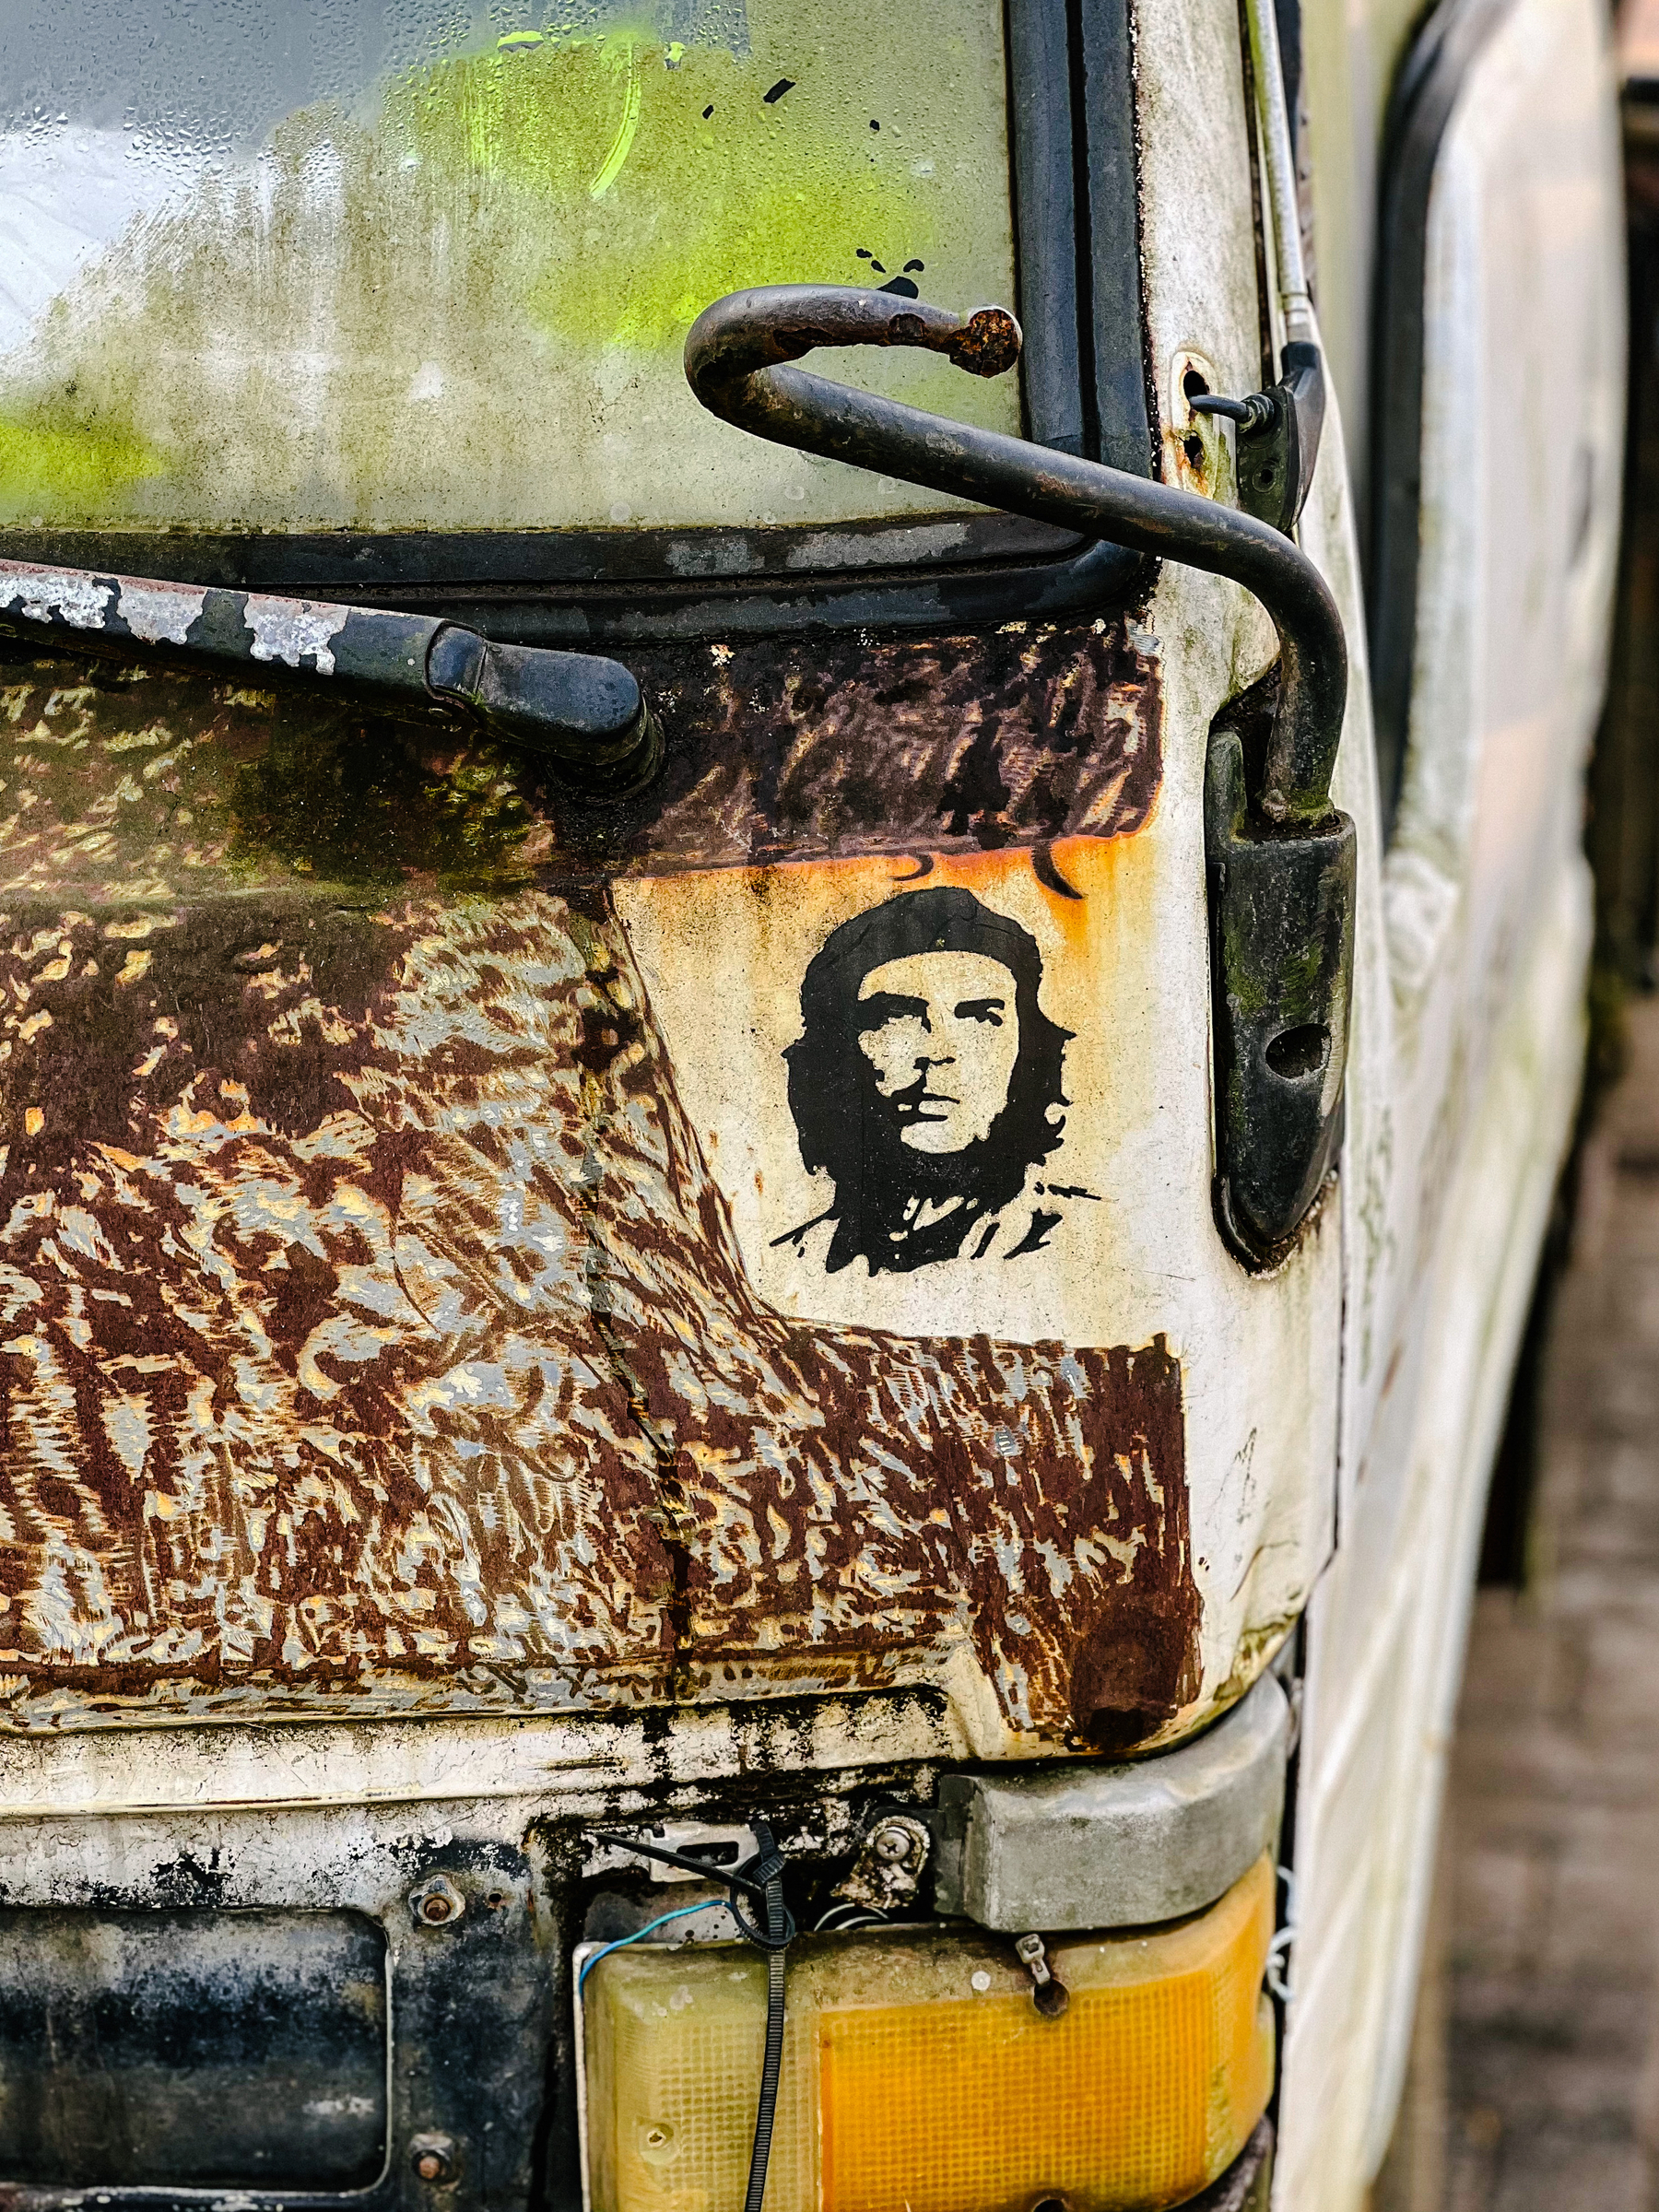 The classic Che Guevara portrait in a derelict truck. 